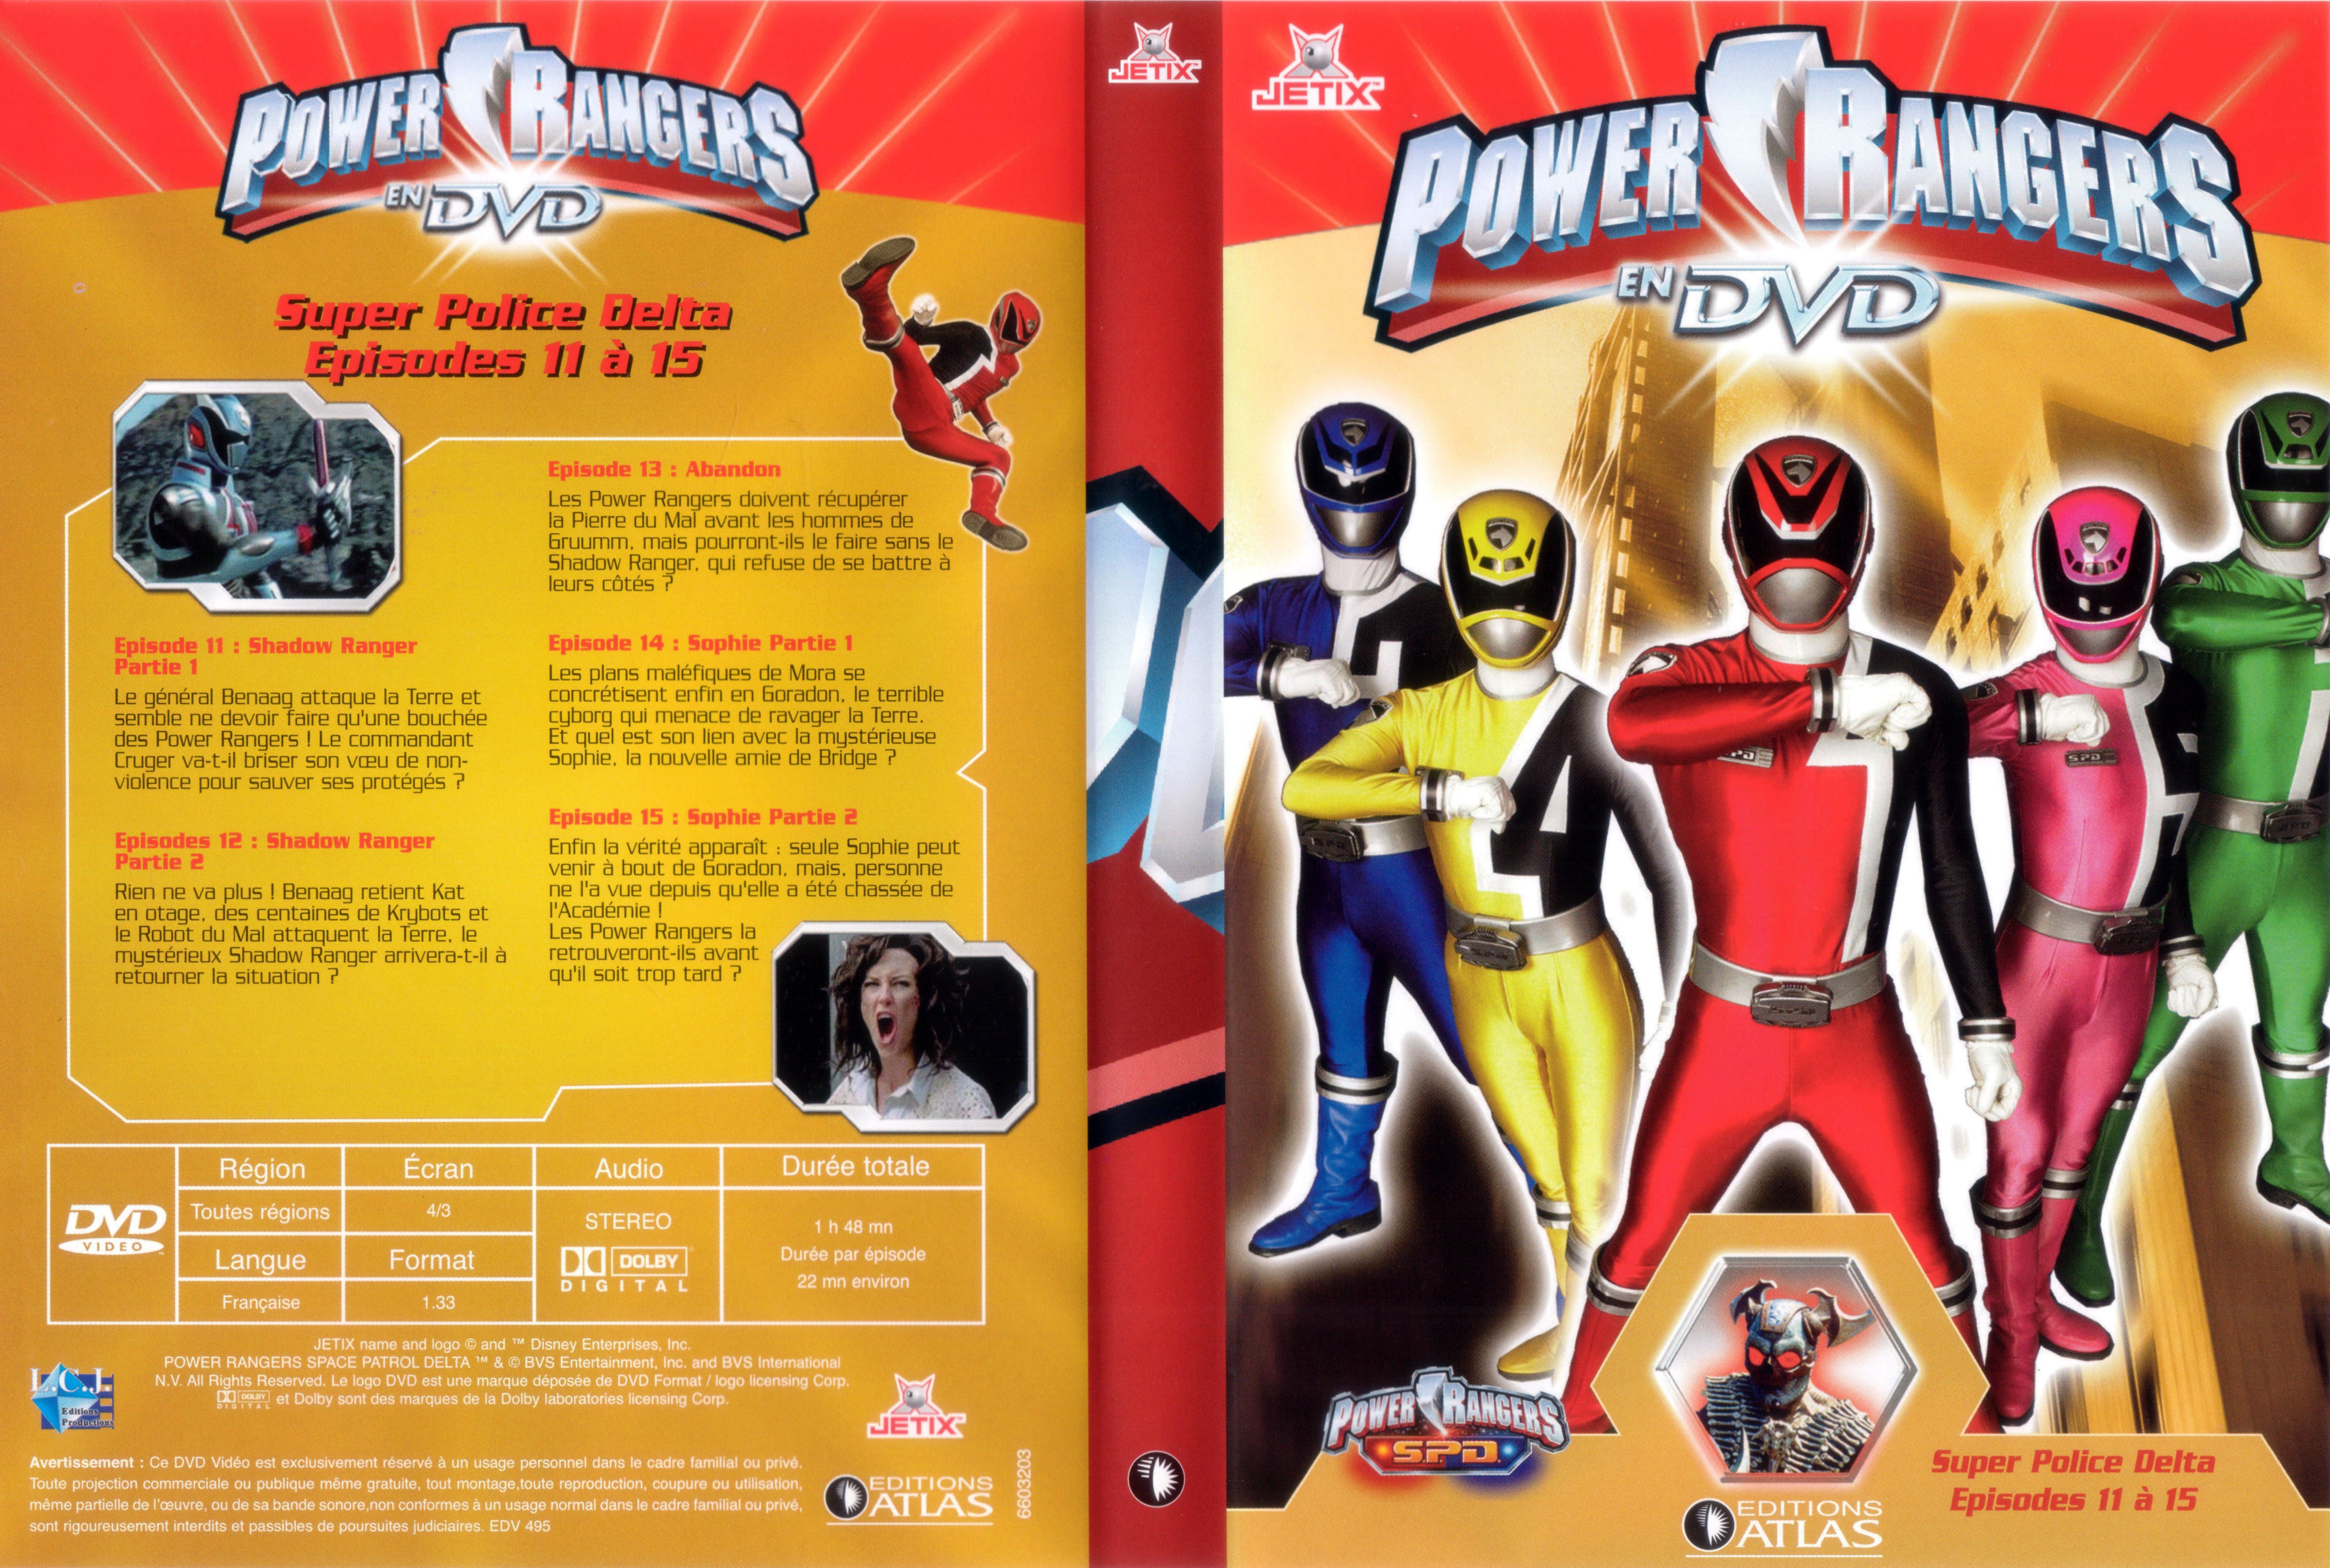 Jaquette DVD Power rangers DVD 3 (Ed Atlas)